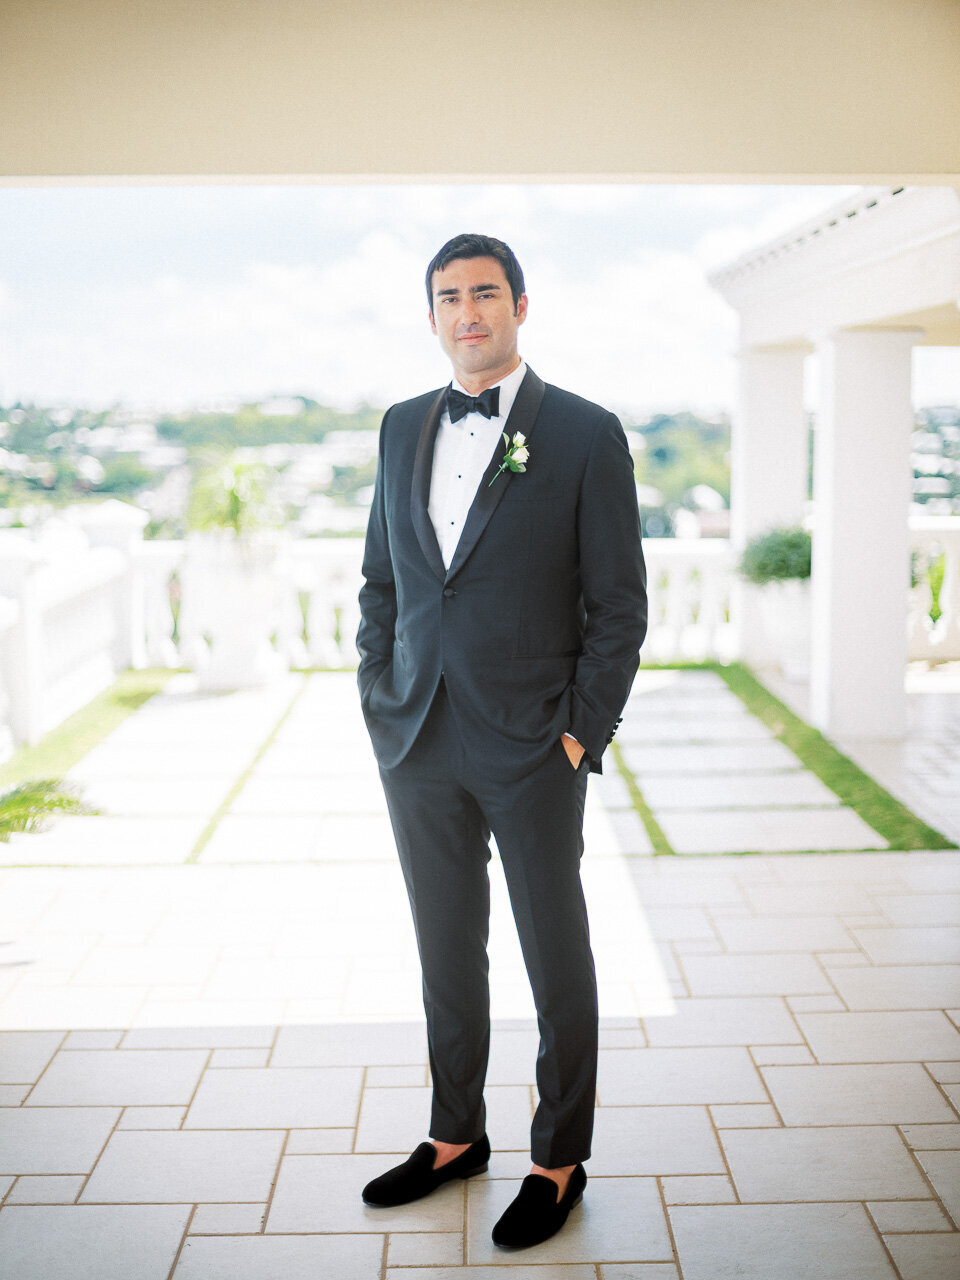 Bermuda Wedding-16